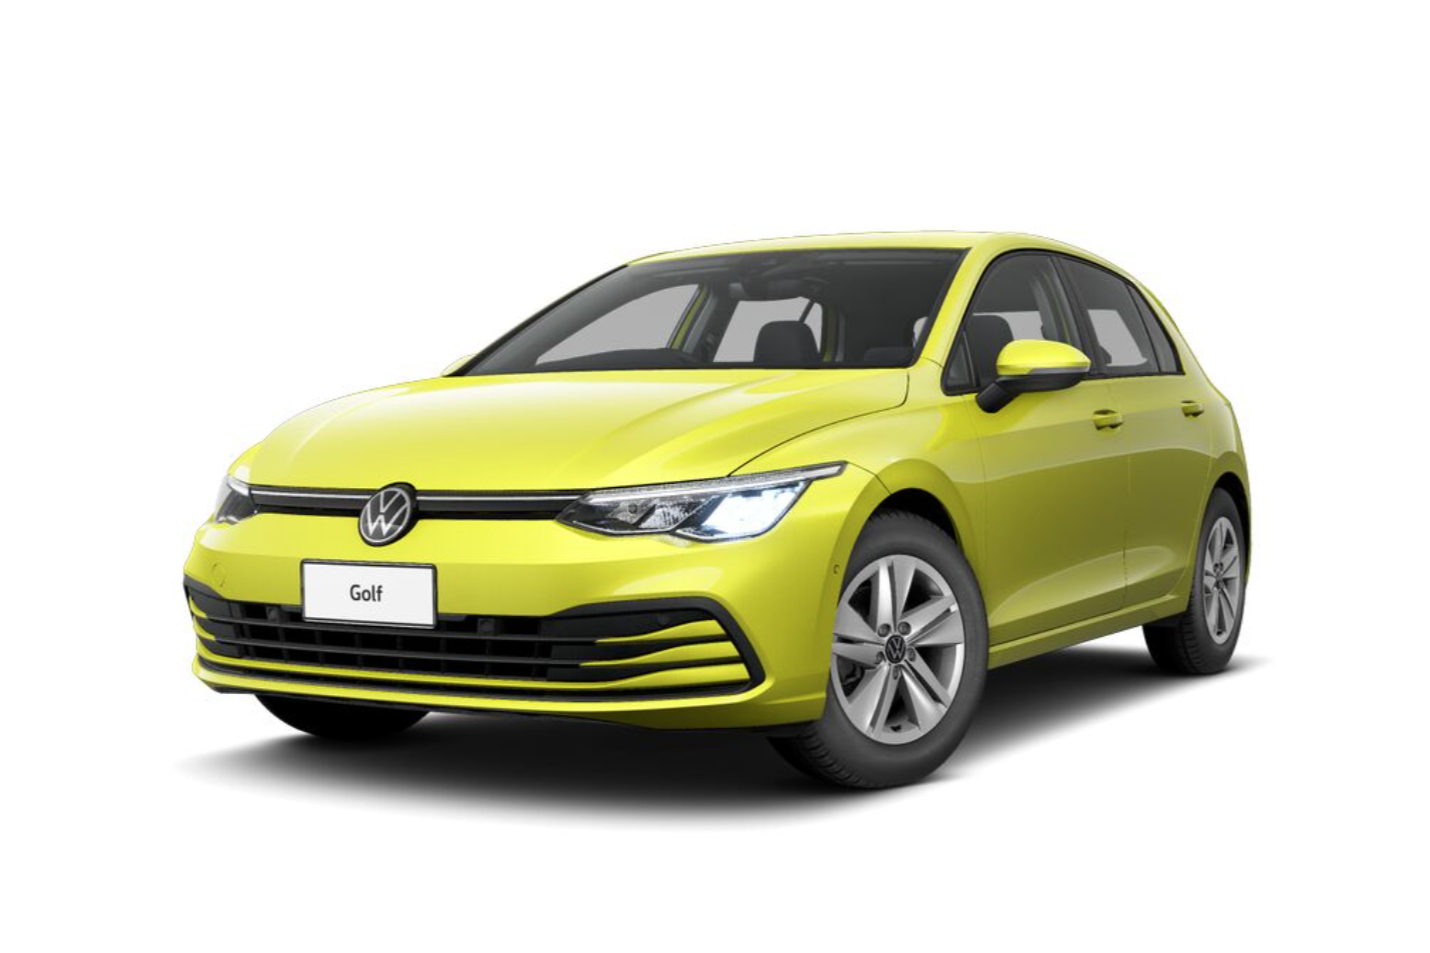 Volkswagen Golf V cars for sale in Australia 